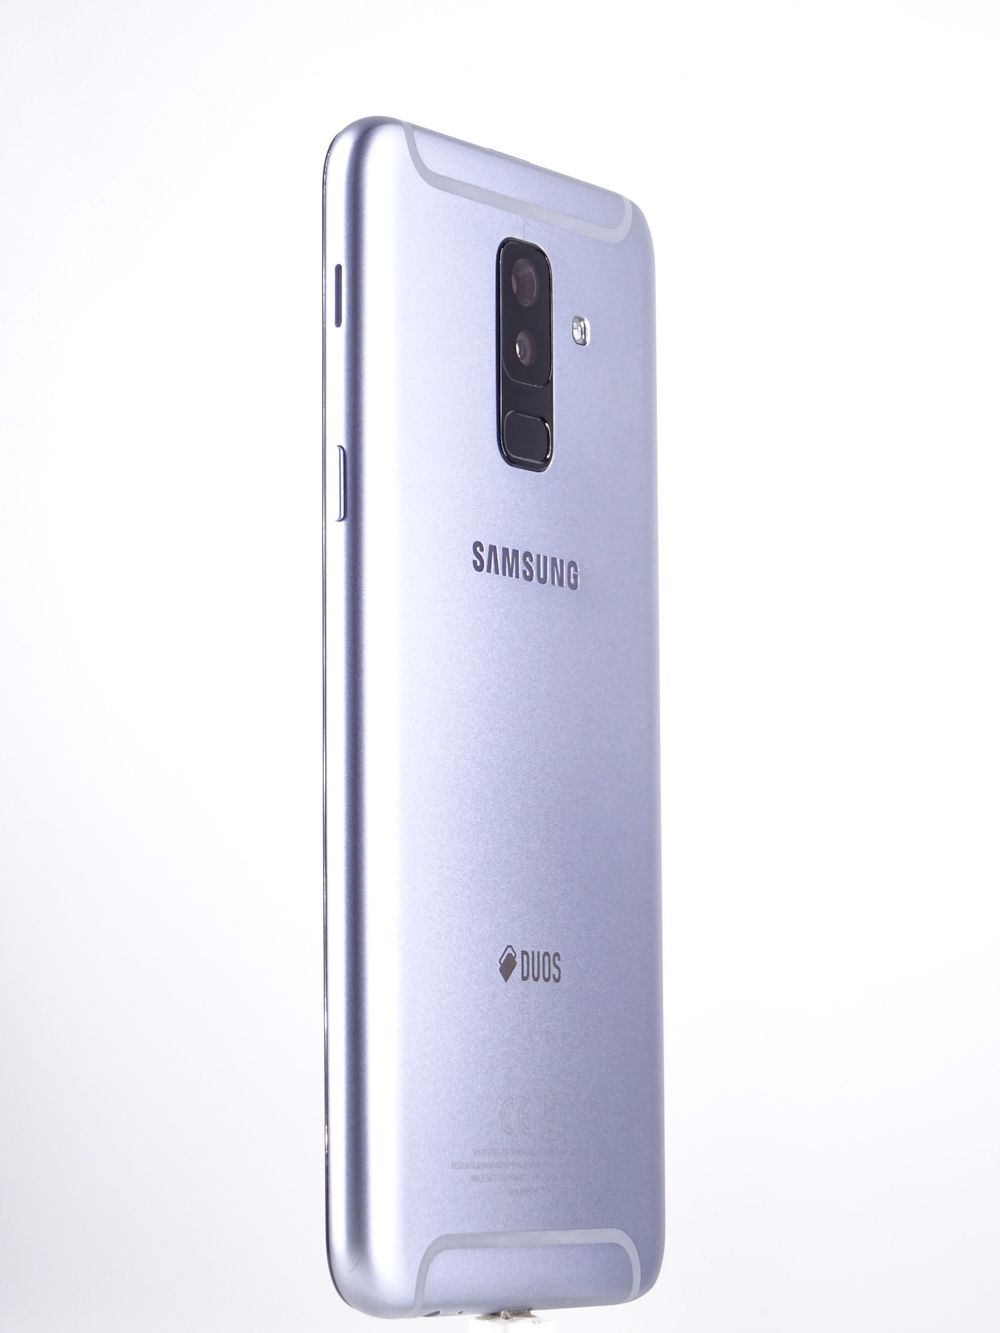 Telefon mobil Samsung Galaxy A6 Plus (2018) Dual Sim, Lavender, 64 GB,  Excelent